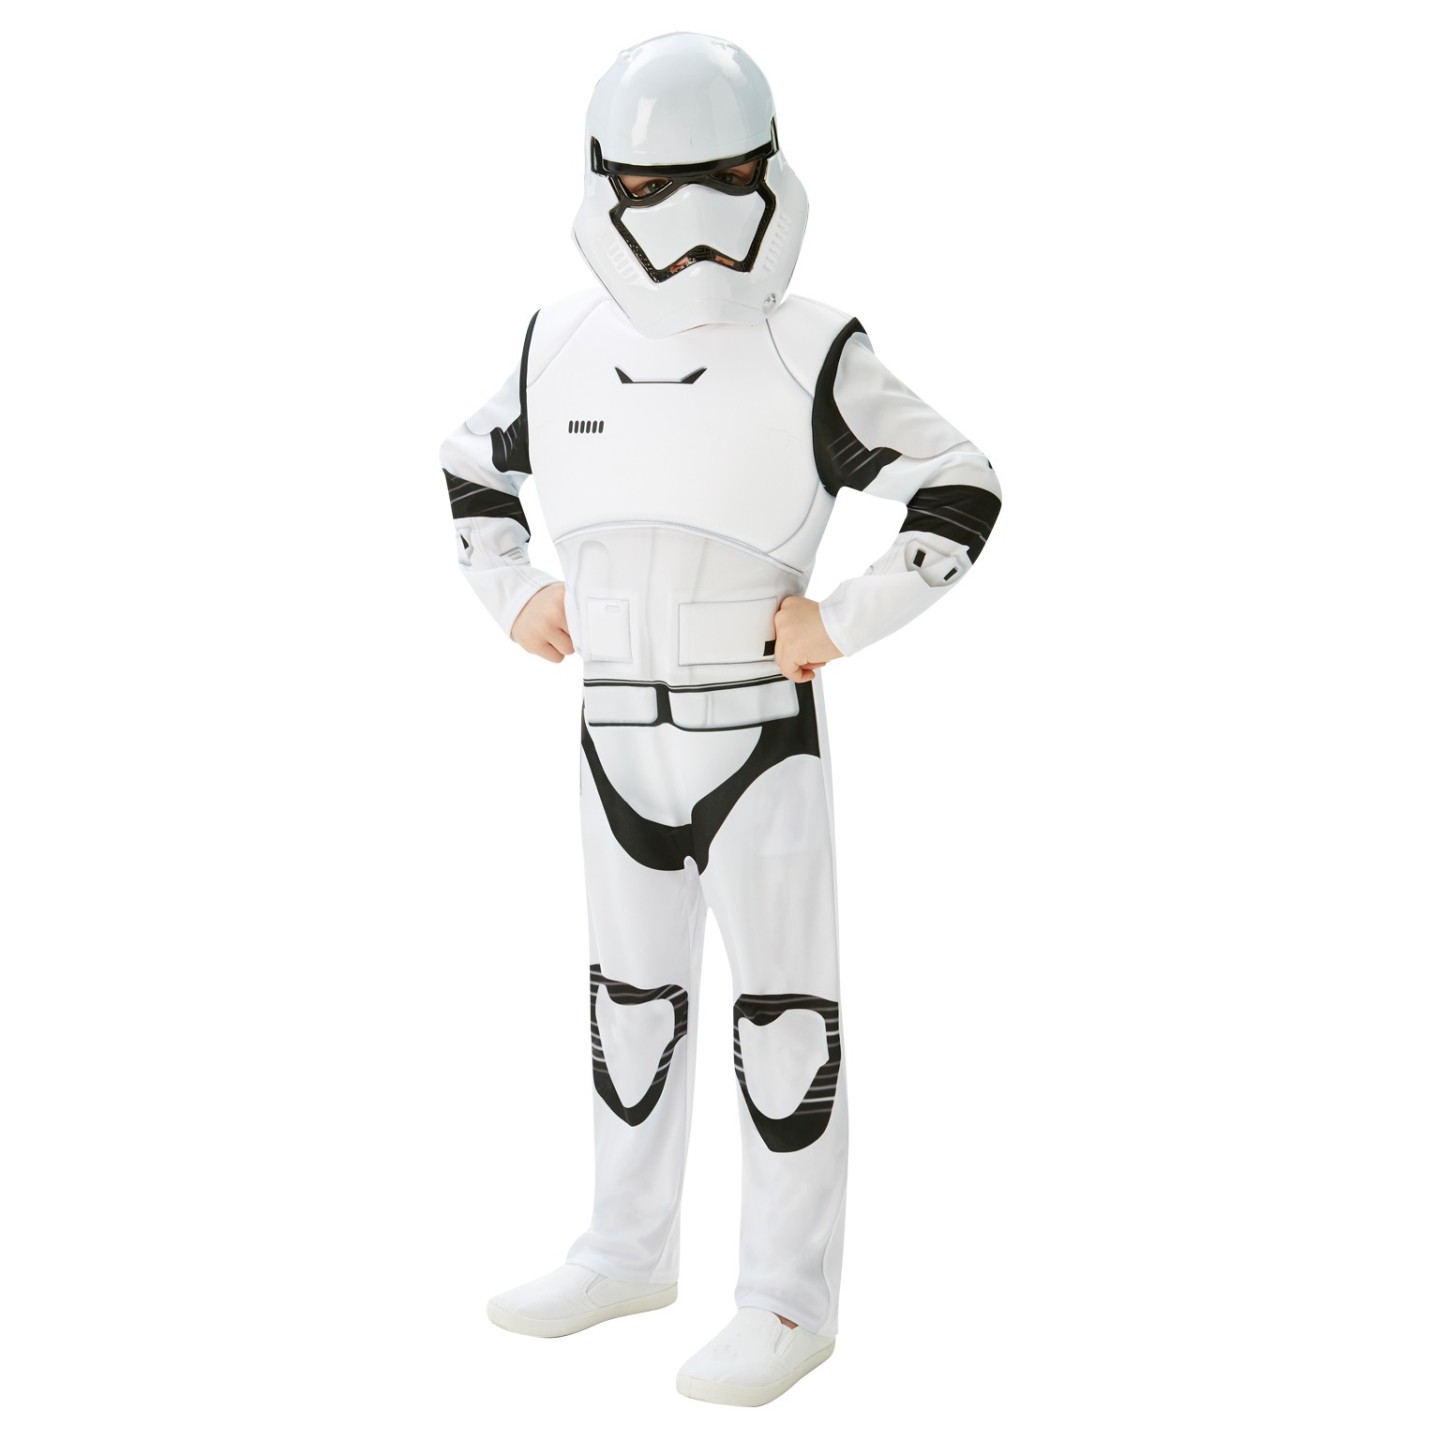 Star Wars kostuum - Stormtrooper pak kopen | Jokershop feestwinkel